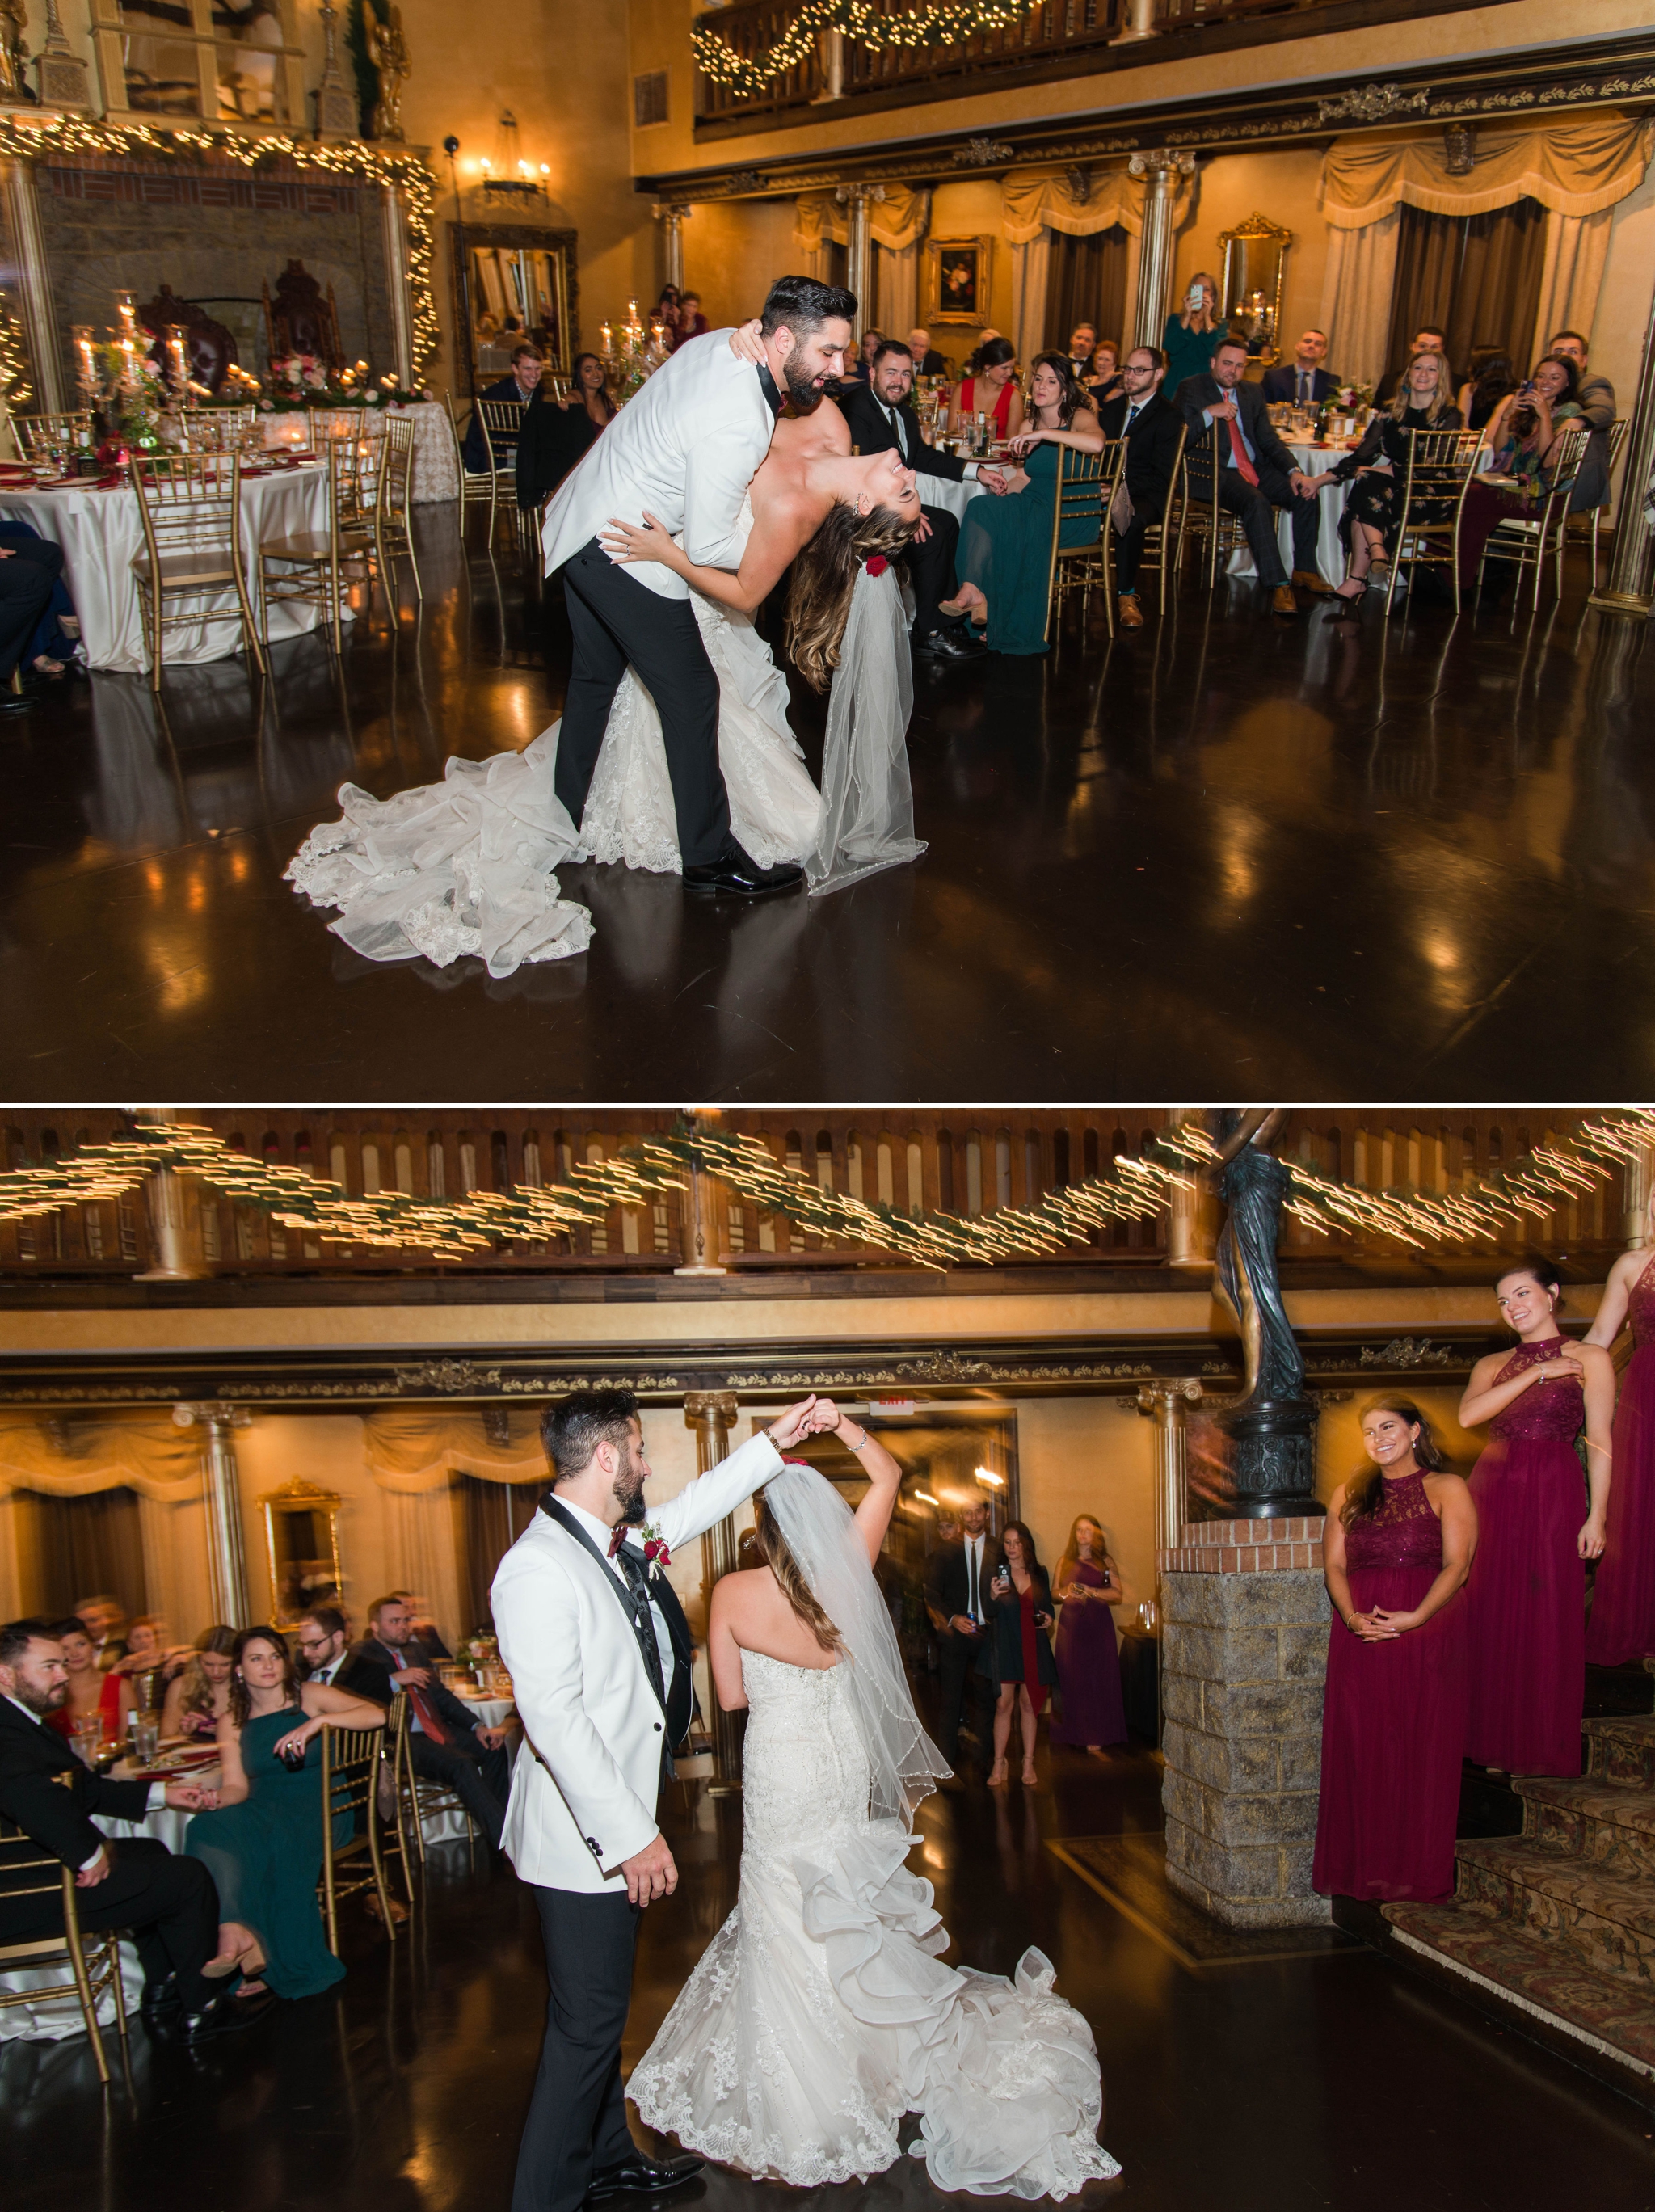 First Dance between Bride and Groom - Honolulu Oahu Hawaii Wedding Photographer